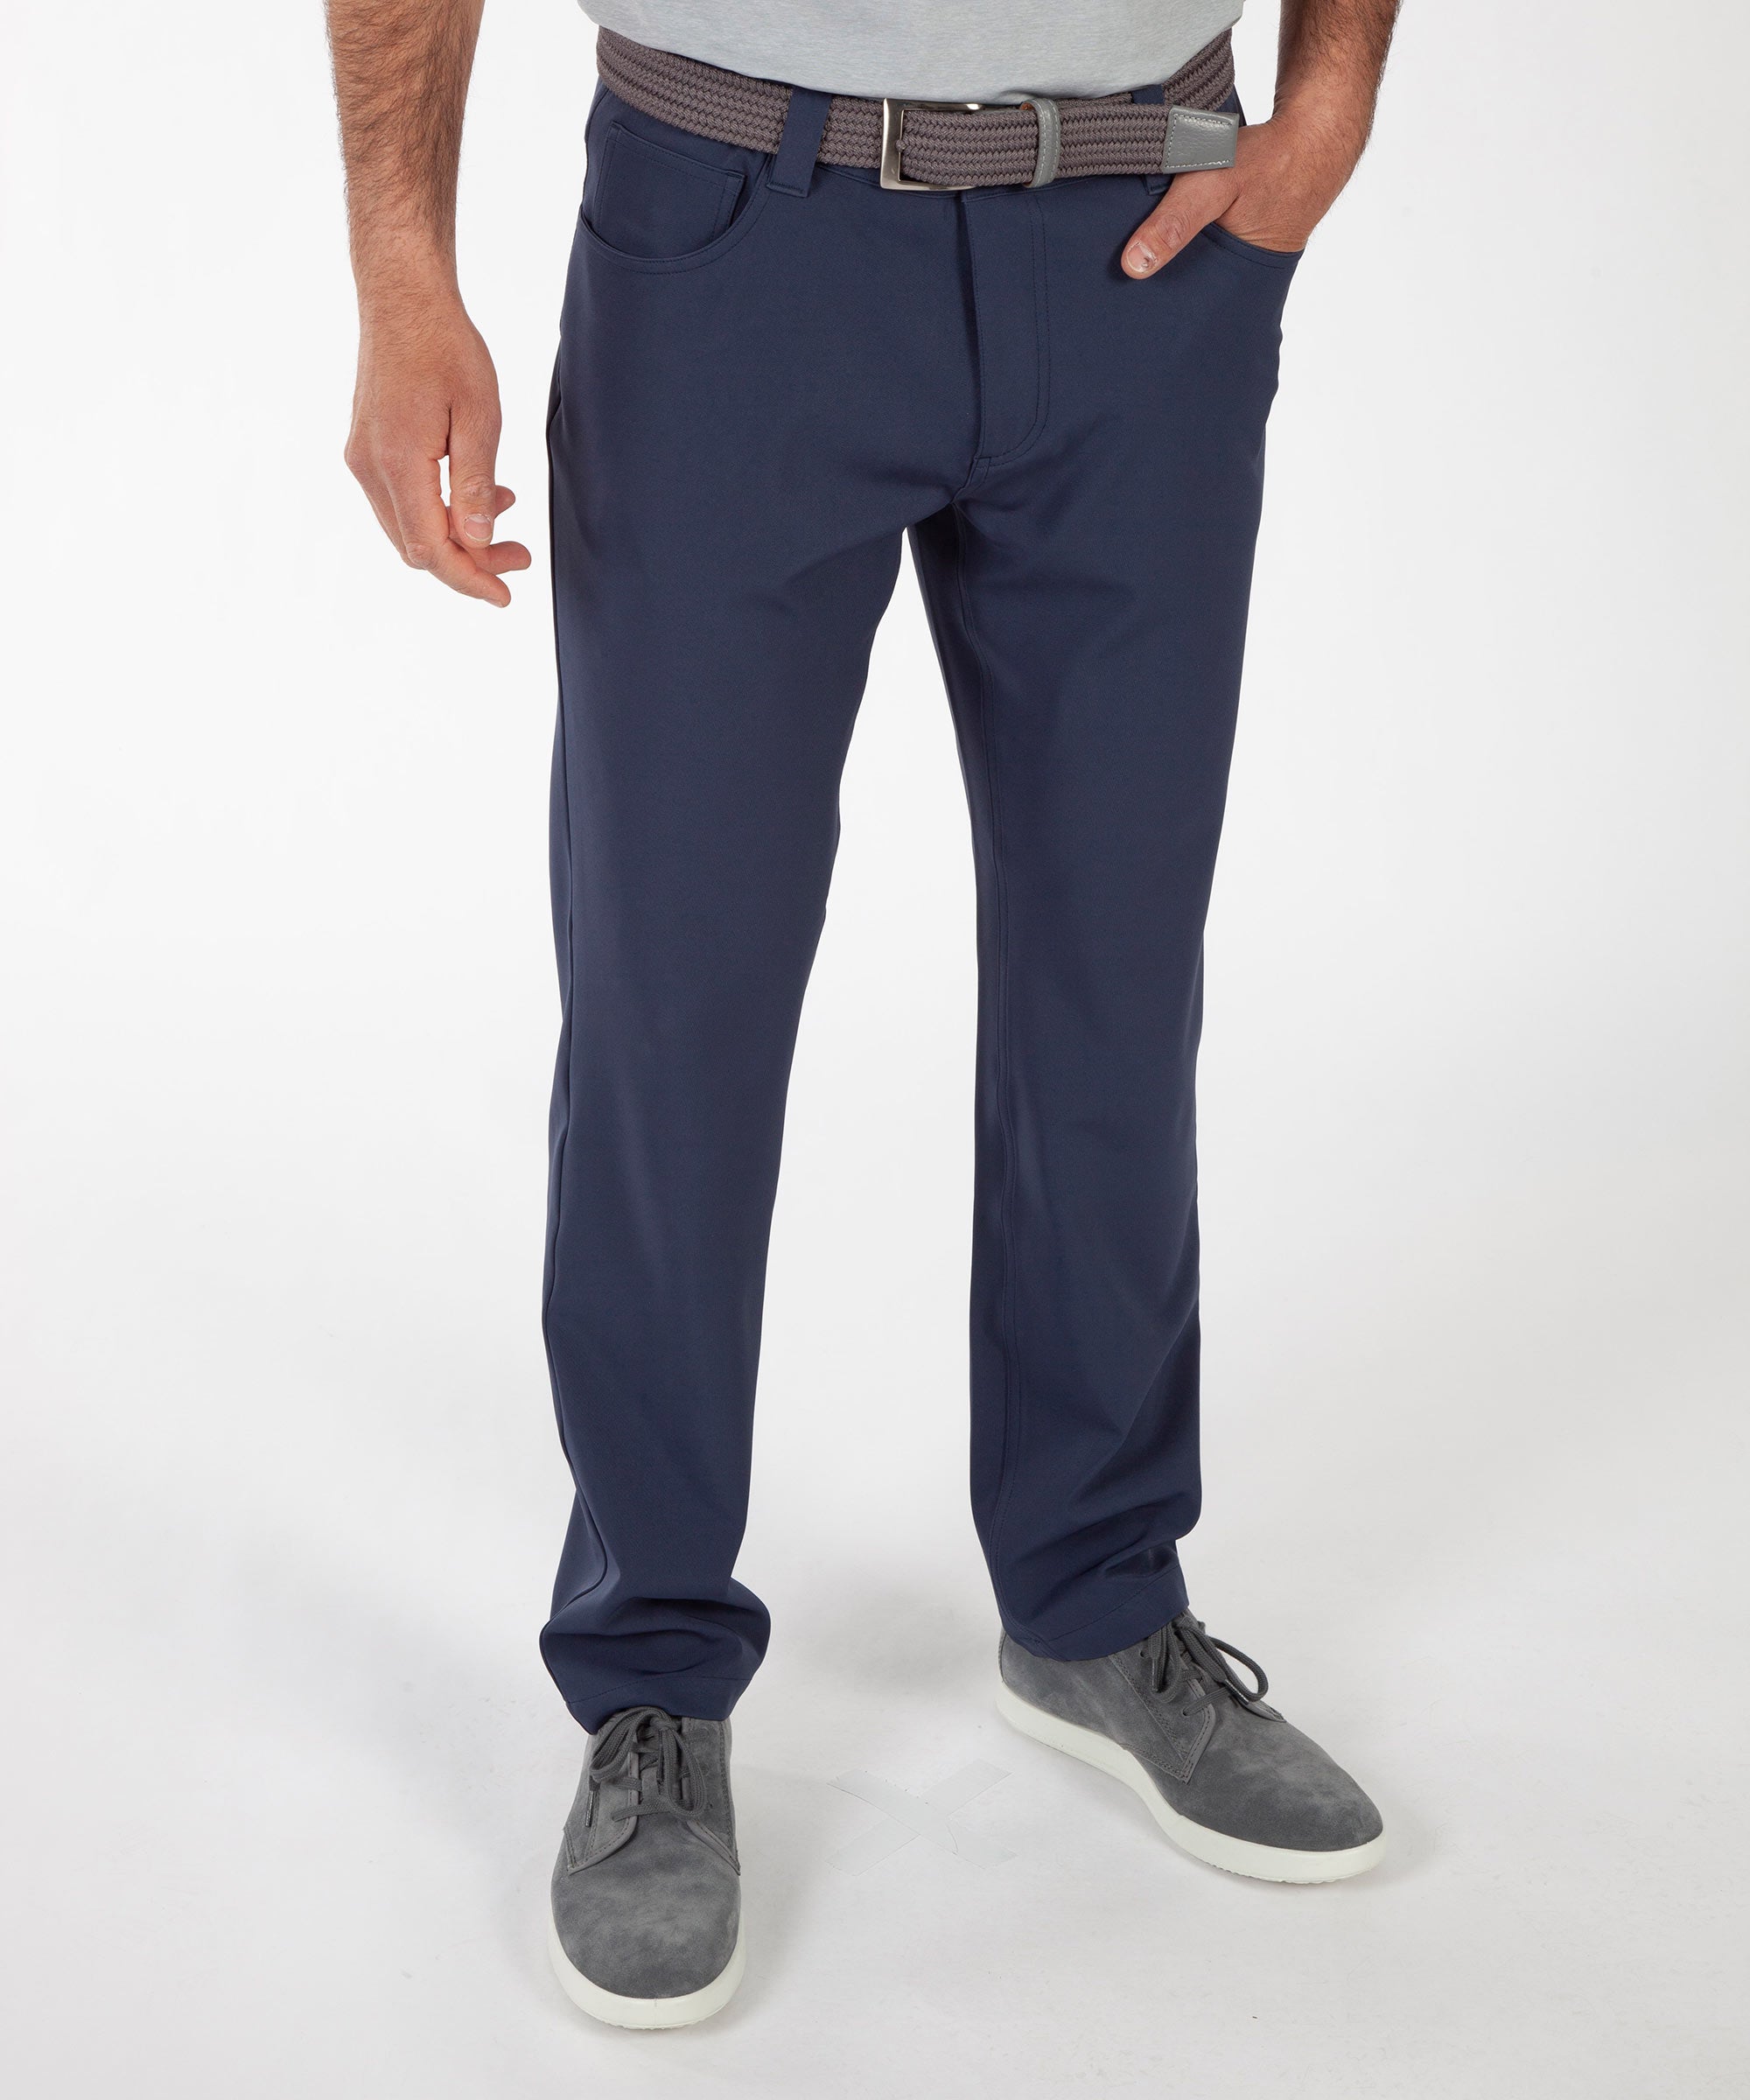 Paisley & Gray Slim Fit 5-Pocket Knit Pants, Black | CoolSprings Galleria